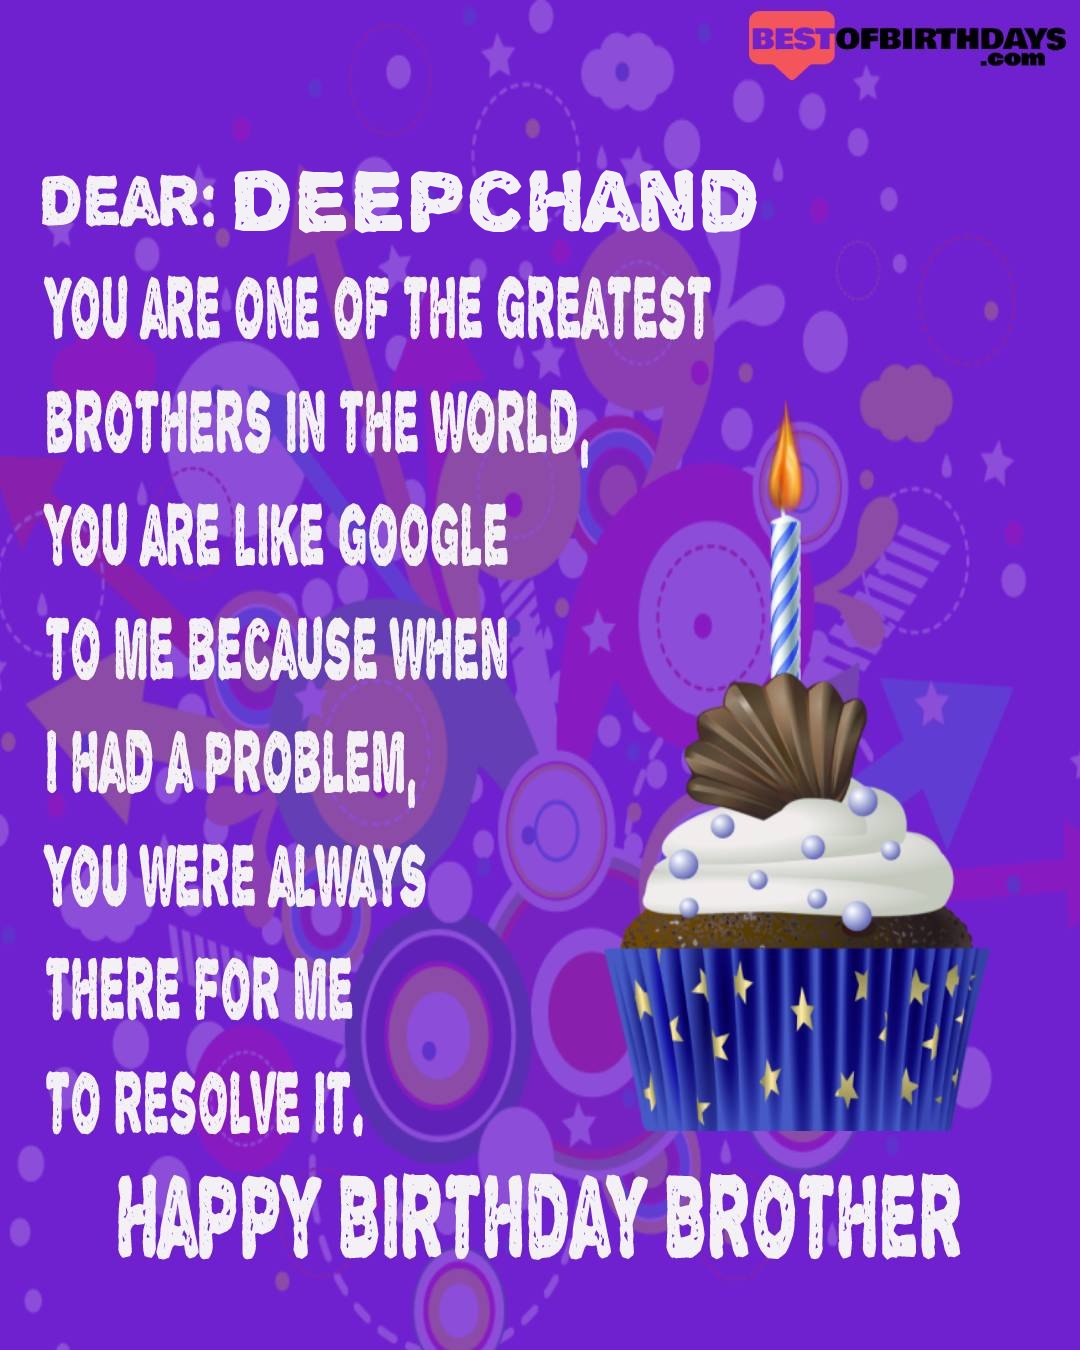 Happy birthday deepchand bhai brother bro